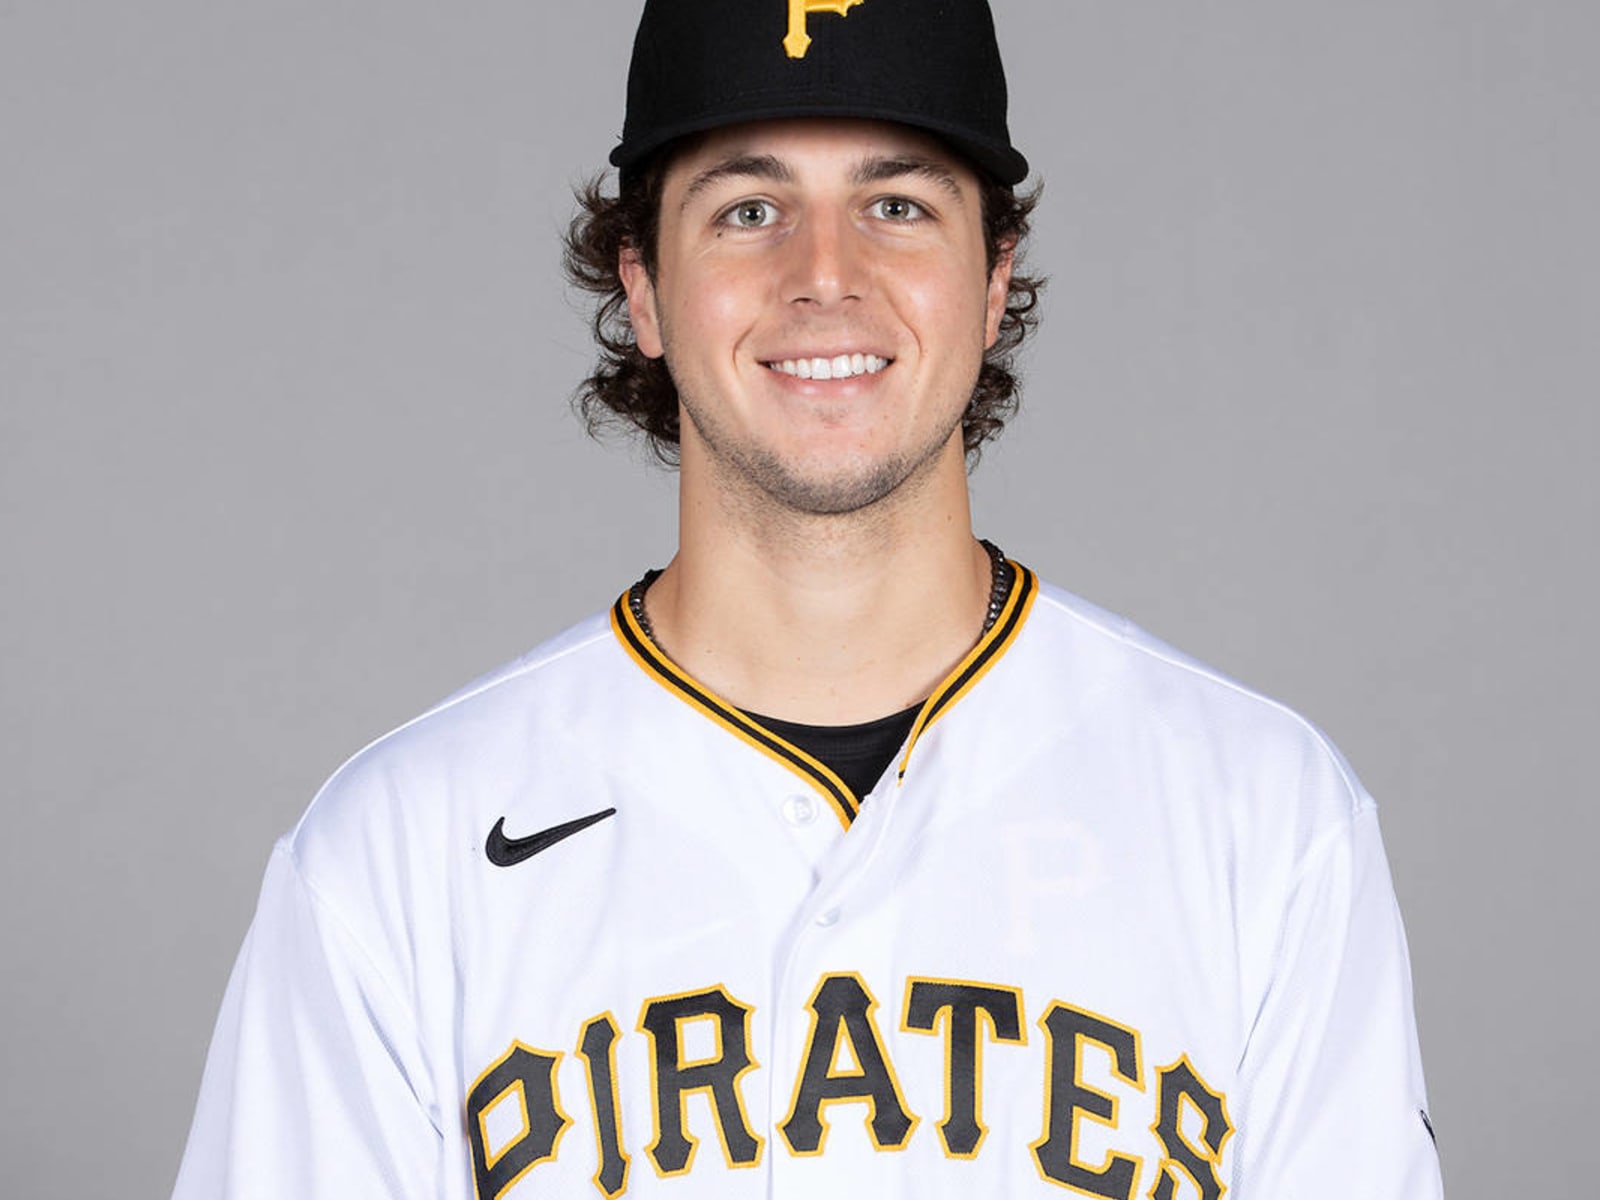 Pittsburgh Pirates to call up Kranick, Sports